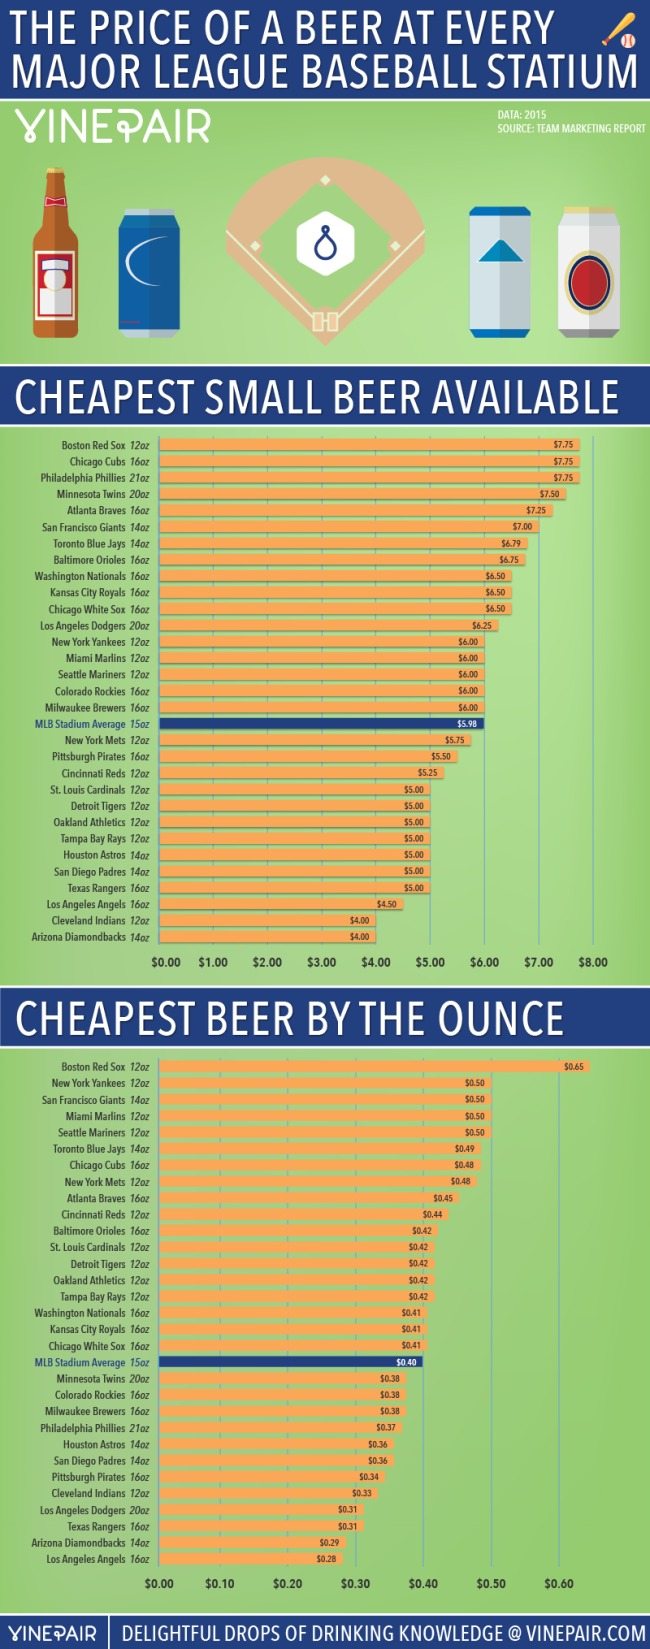 mlb-stadium-beer-price-rankings-infographic